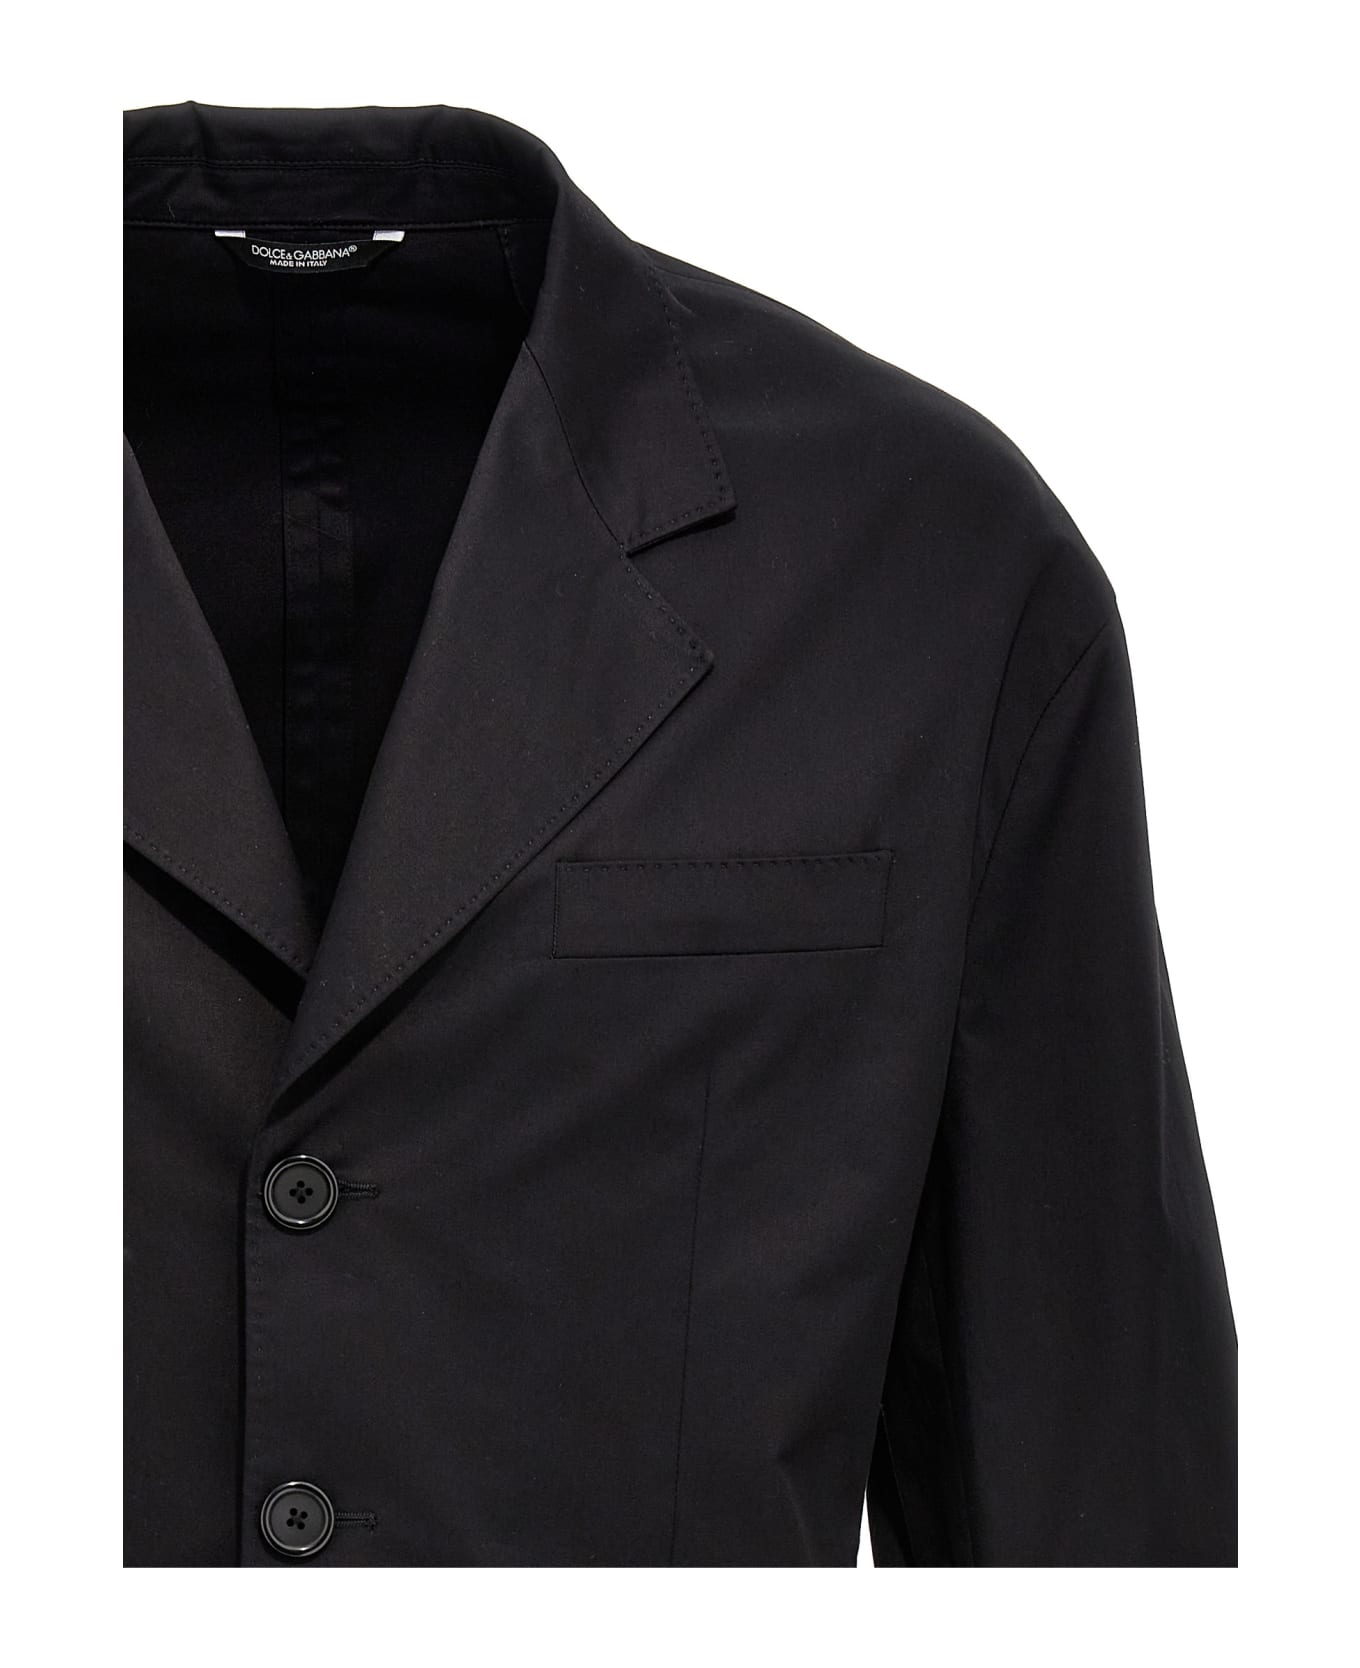 Dolce & Gabbana 're-edition S/s 1992' Blazer Jacket - Black  